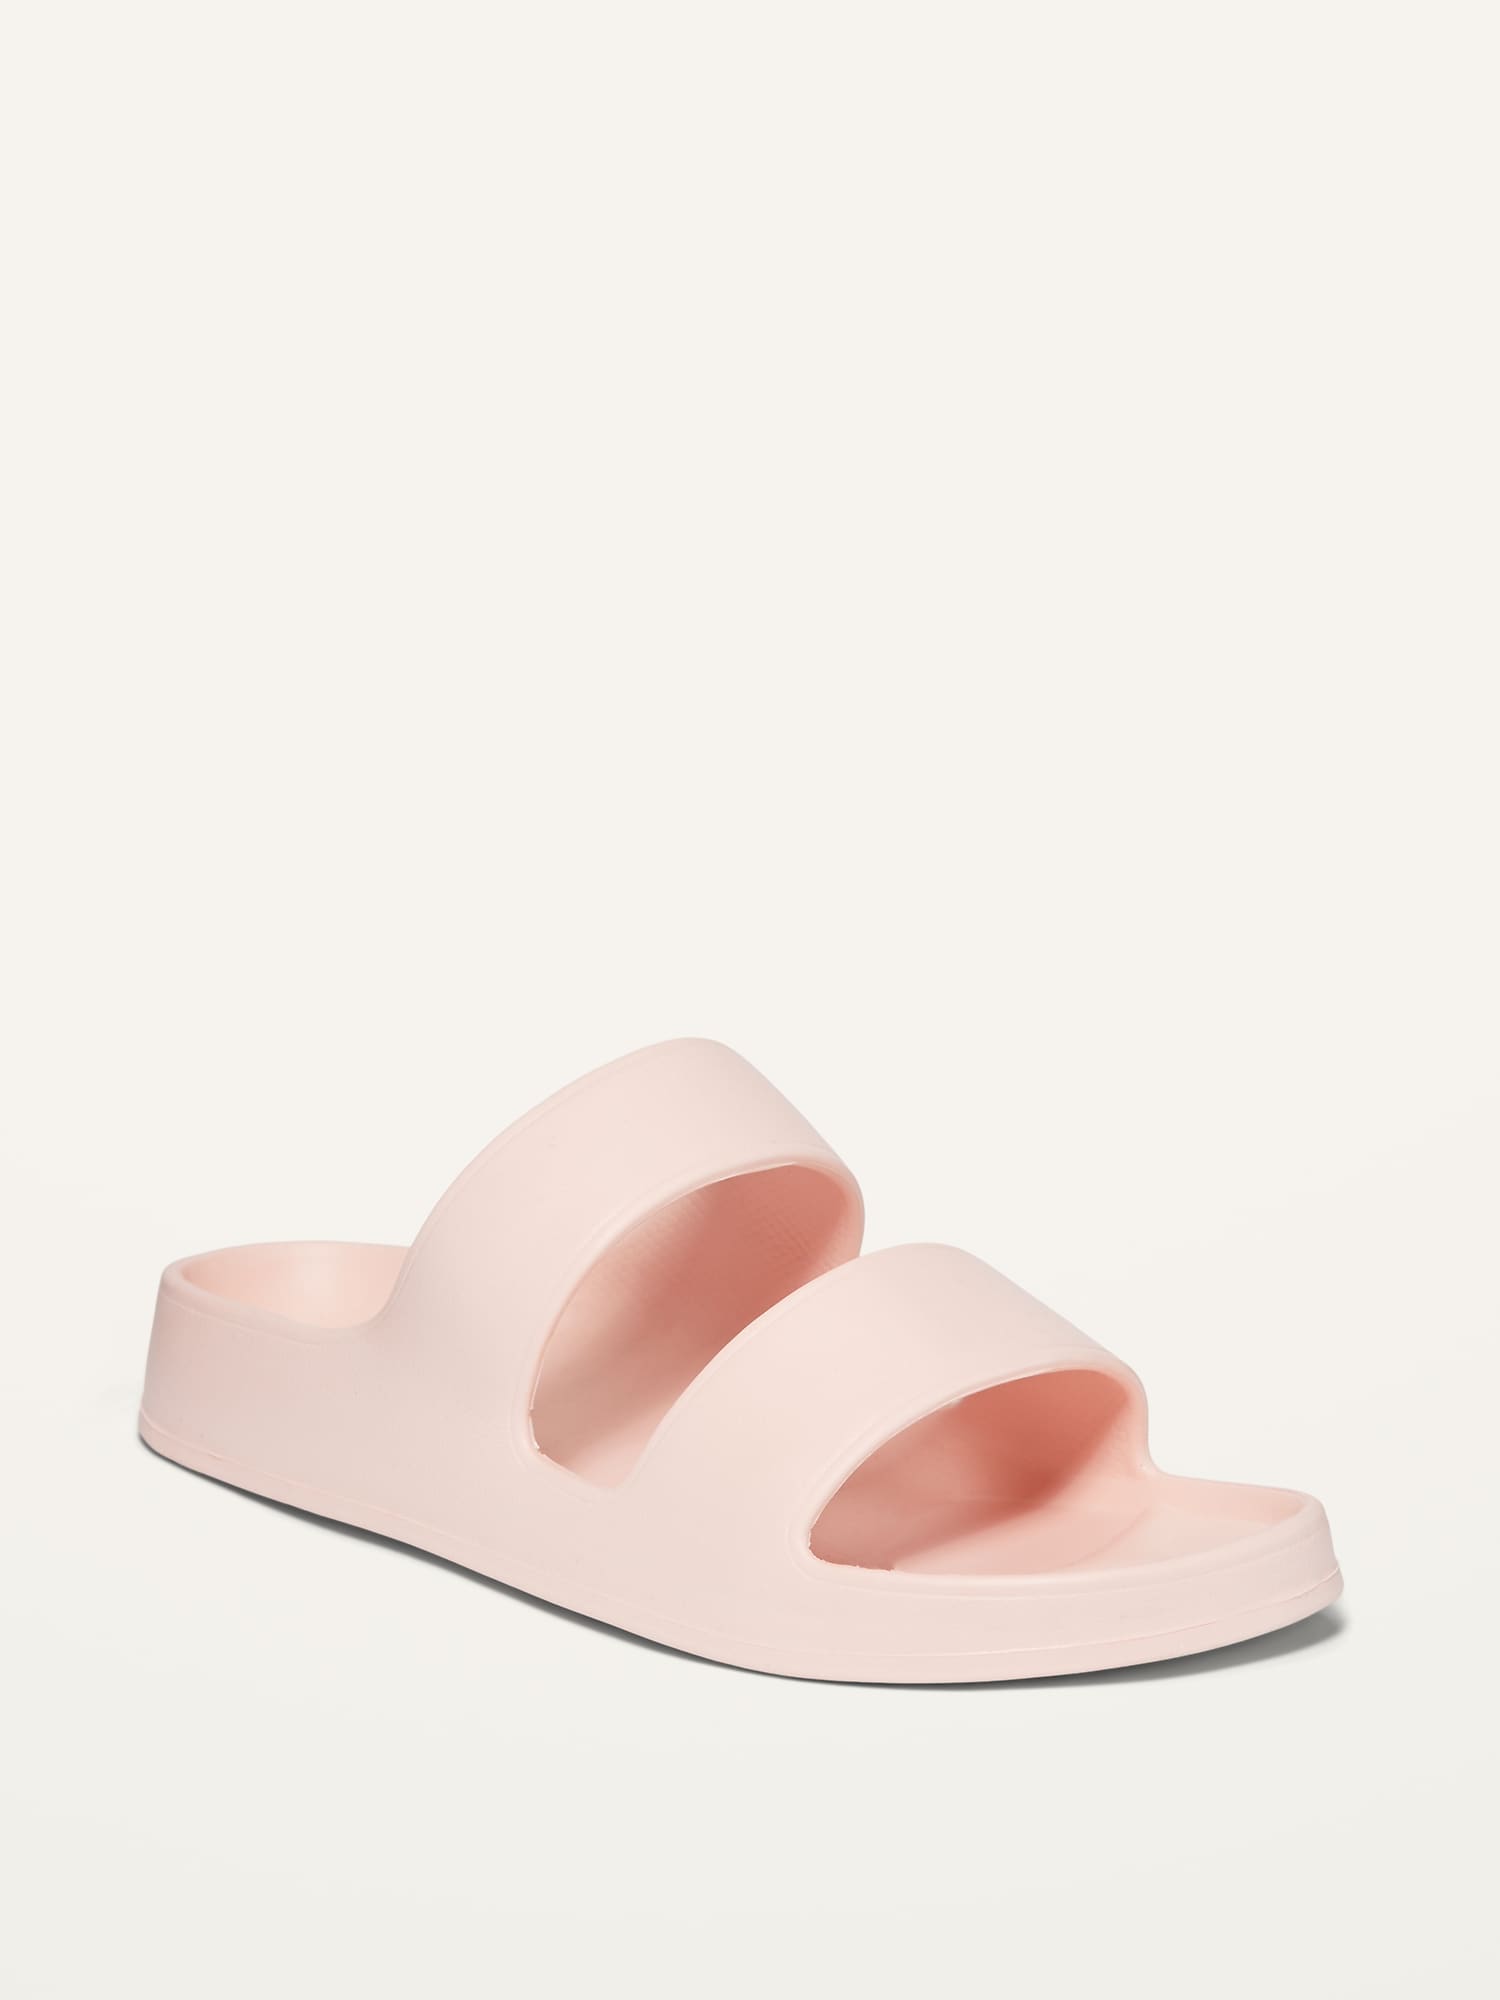 Solid-Color EVA Double-Strap Slide Sandals for Women | Old Navy